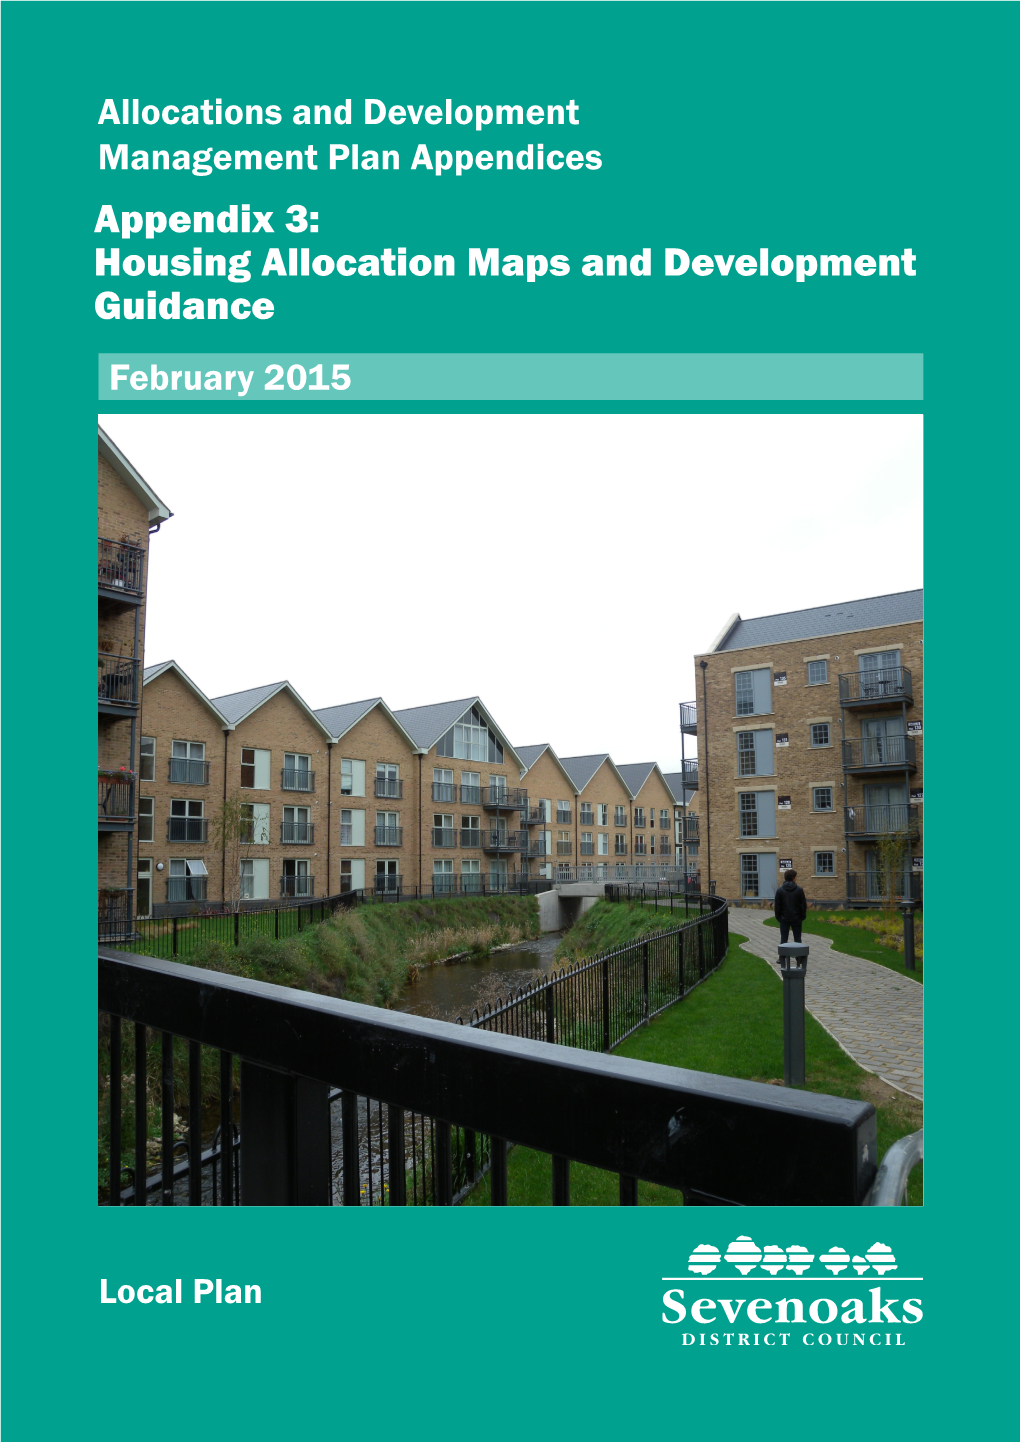 Appendix 3: Housing Allocation Maps and Development Guidance February 2015